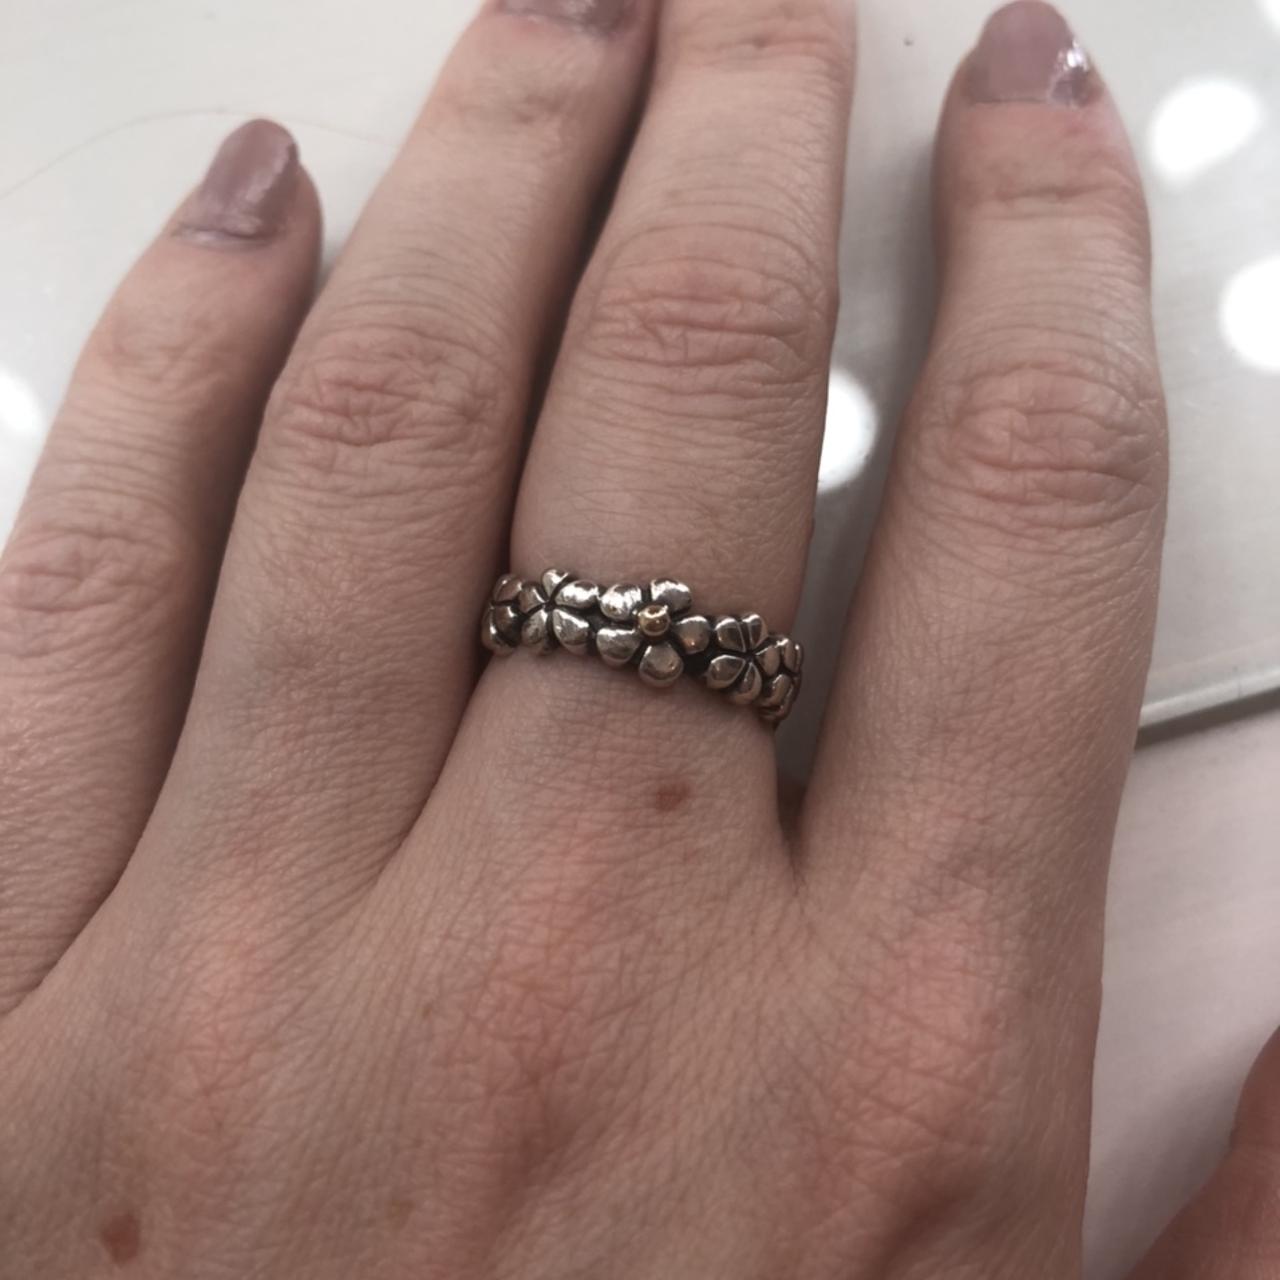 Pandora June droplet ring - grey moonstone -size 7 | Pandora jewelry  charms, Pandora jewelry rings, Pandora jewelry